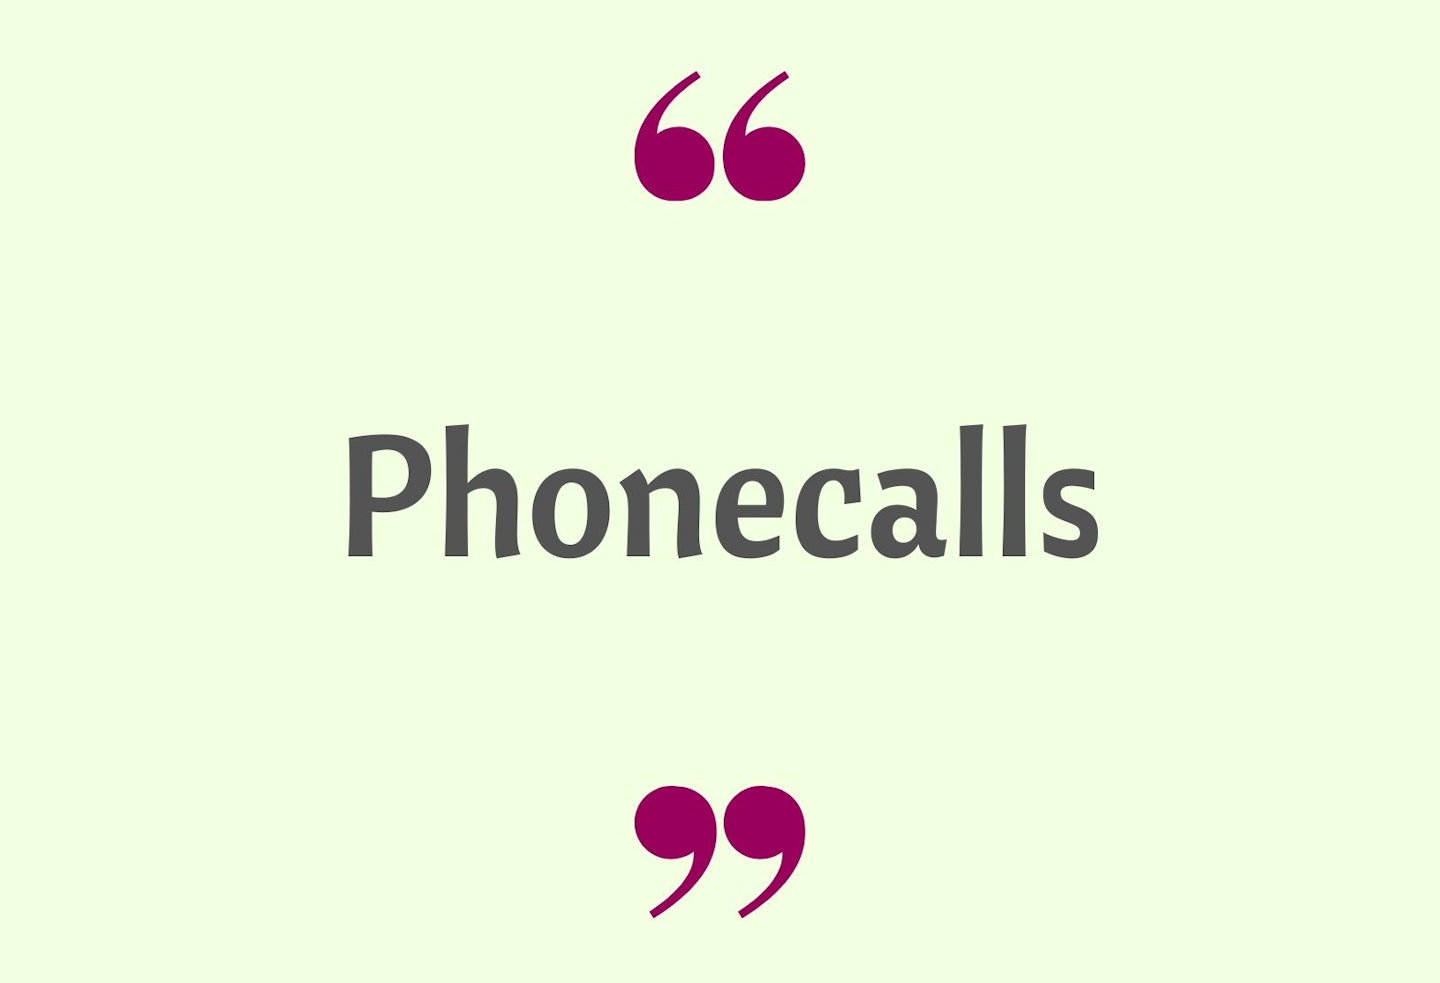 10) Phonecalls